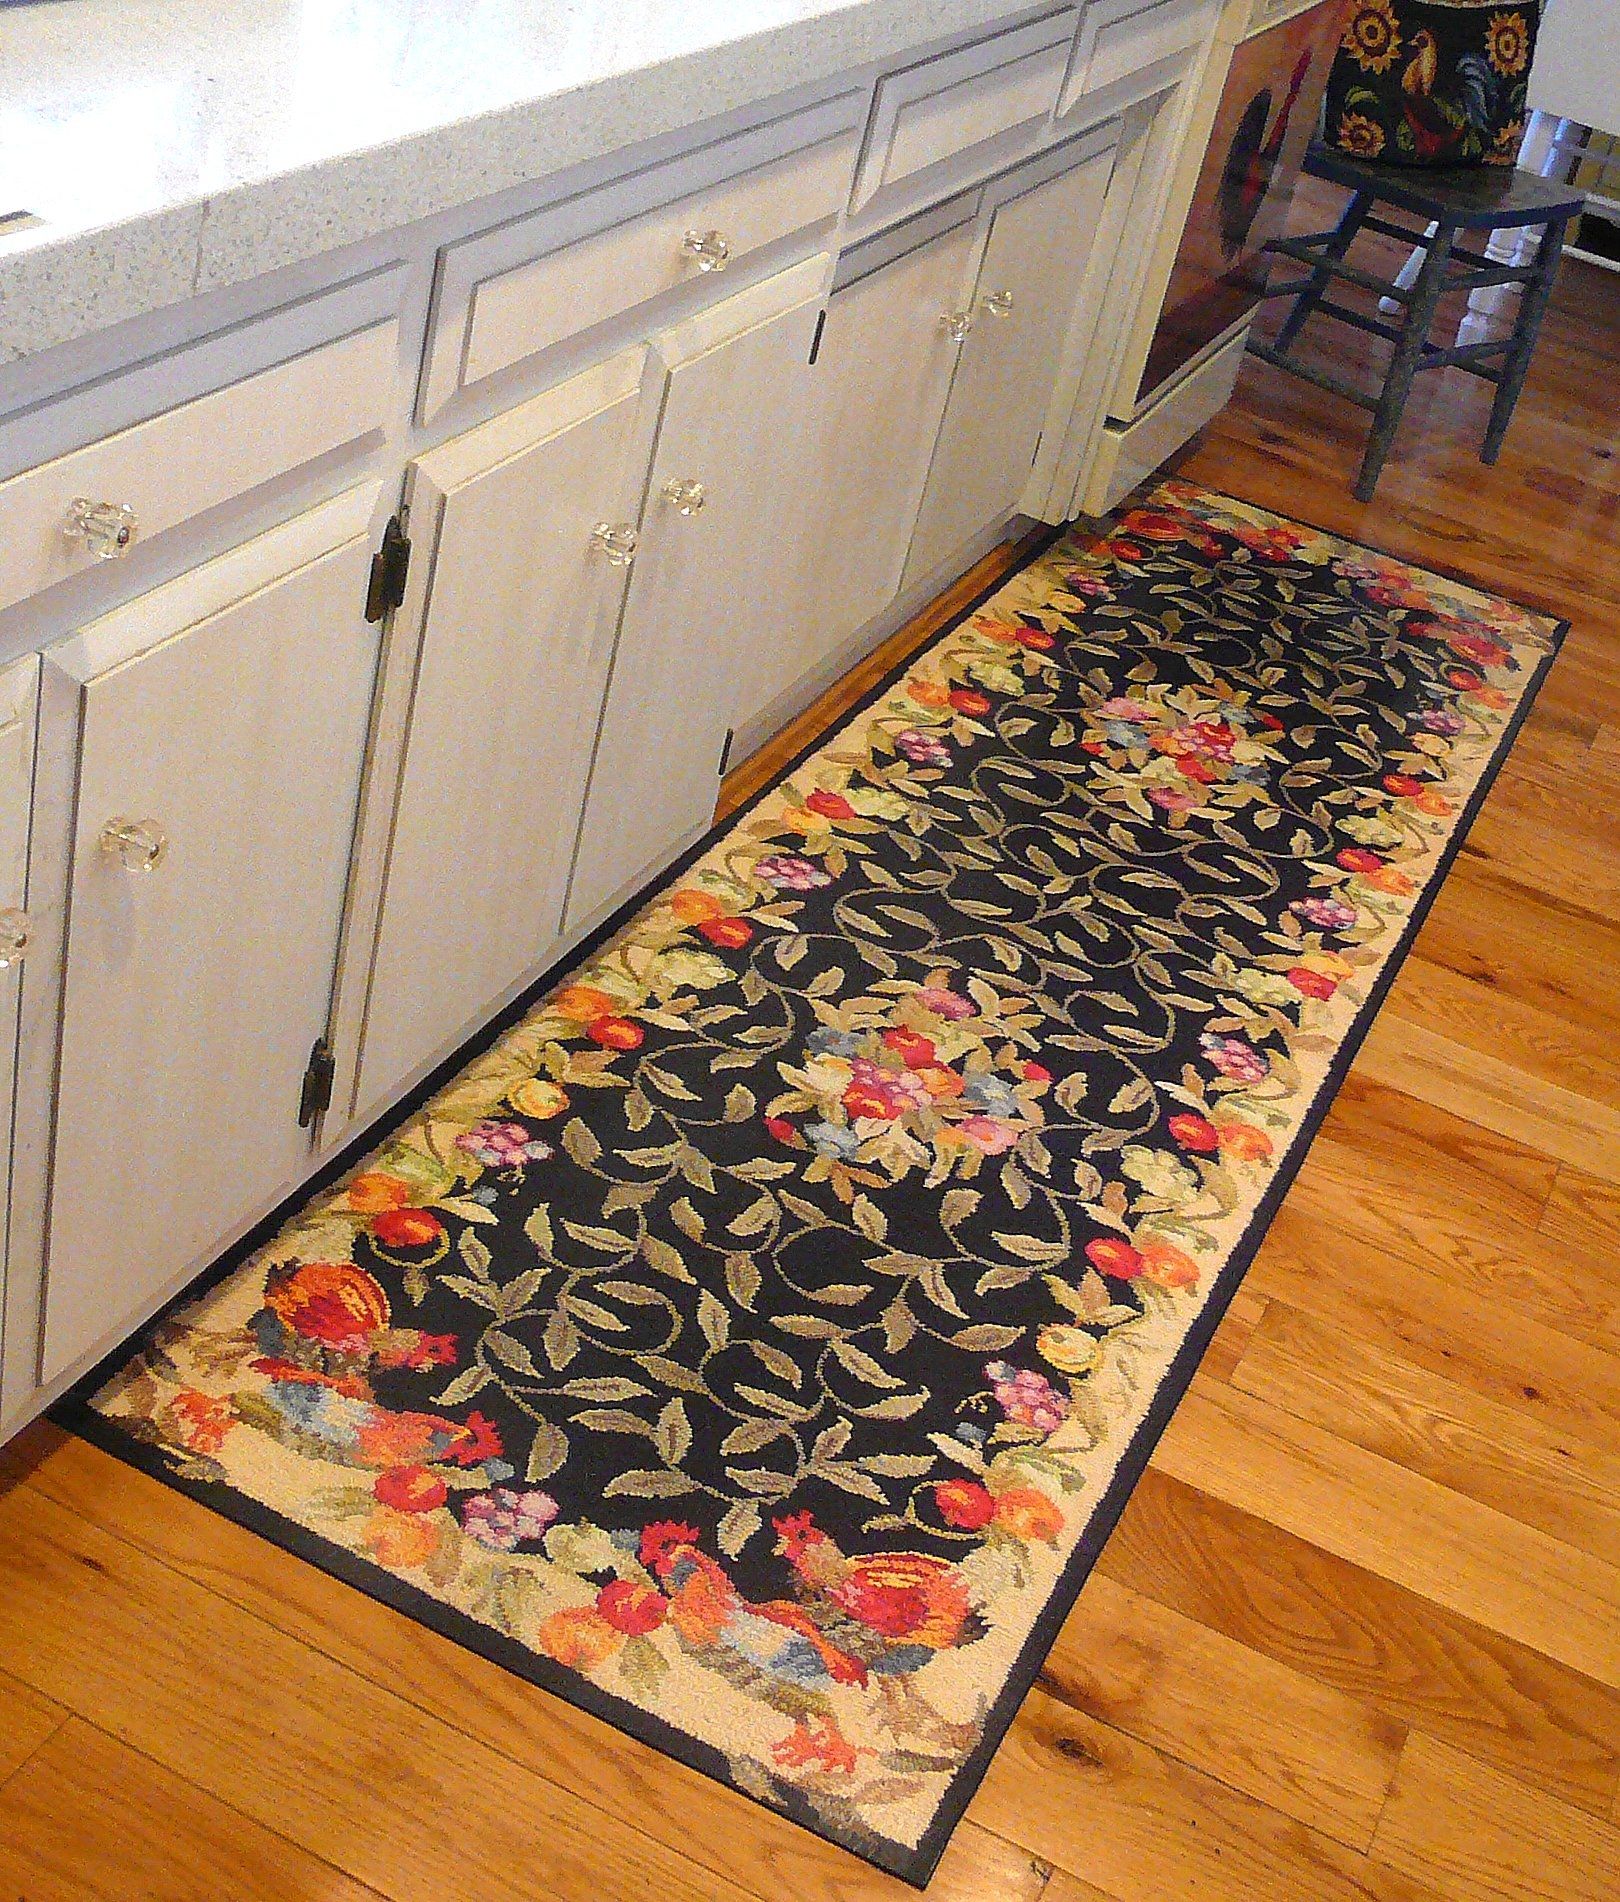 Kitchen Backsplash Tile Carpet Runners For Kitchen Kitchen Sink With Washable Runner Rugs For Hallways (View 15 of 20)